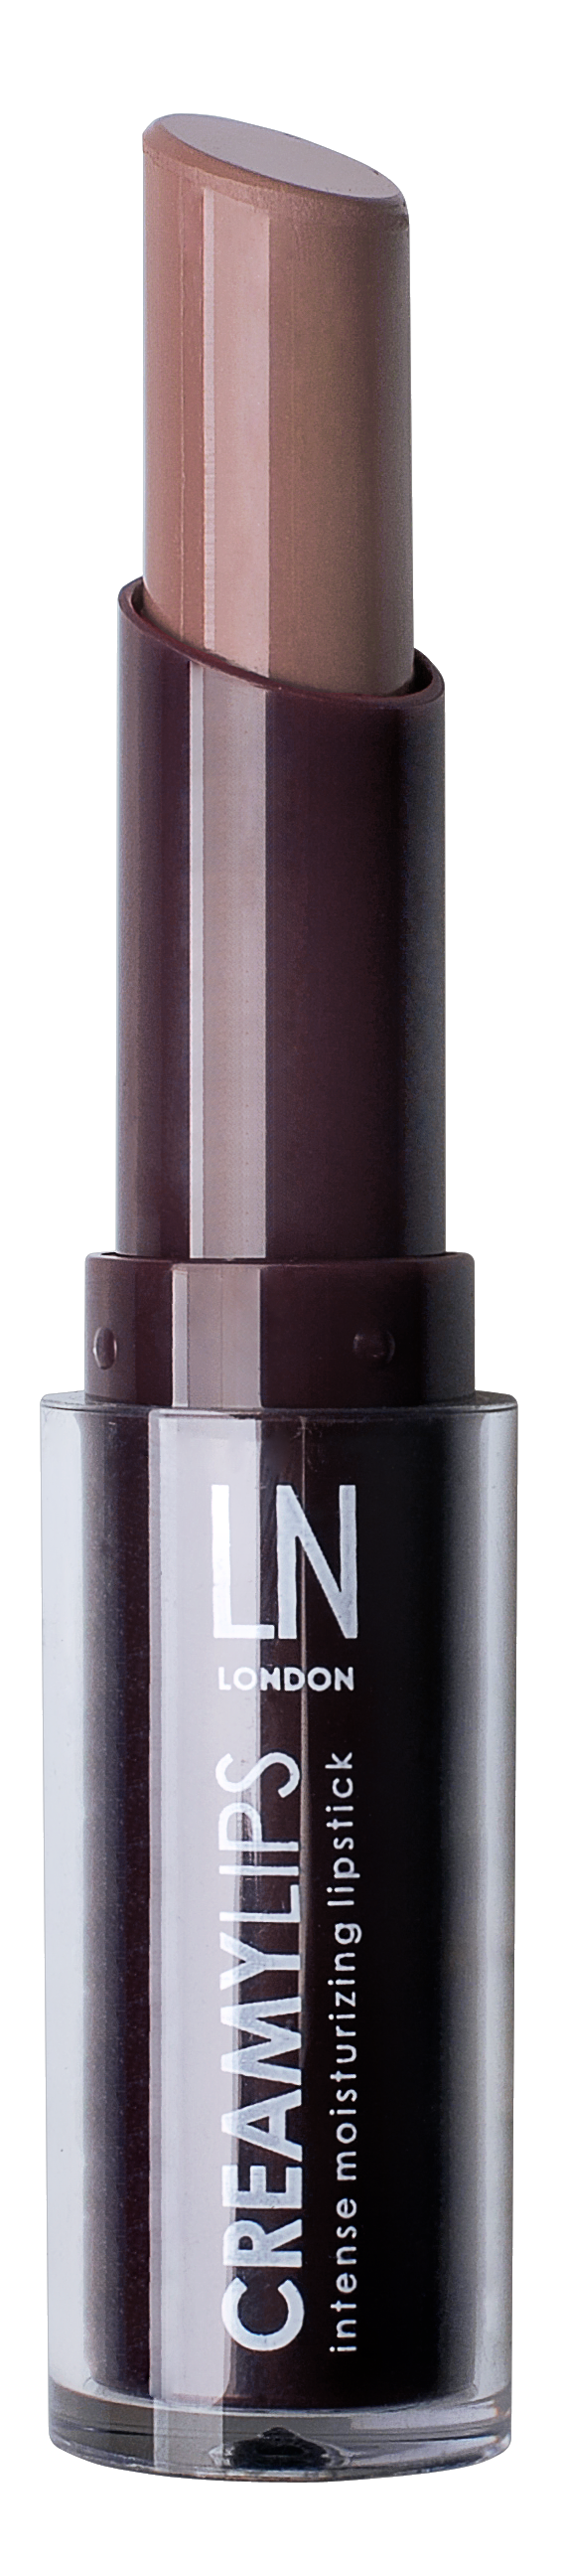 Кремовая помада для губ LN Professional Creamy Lips, тон 2, 3,6 г - фото 1